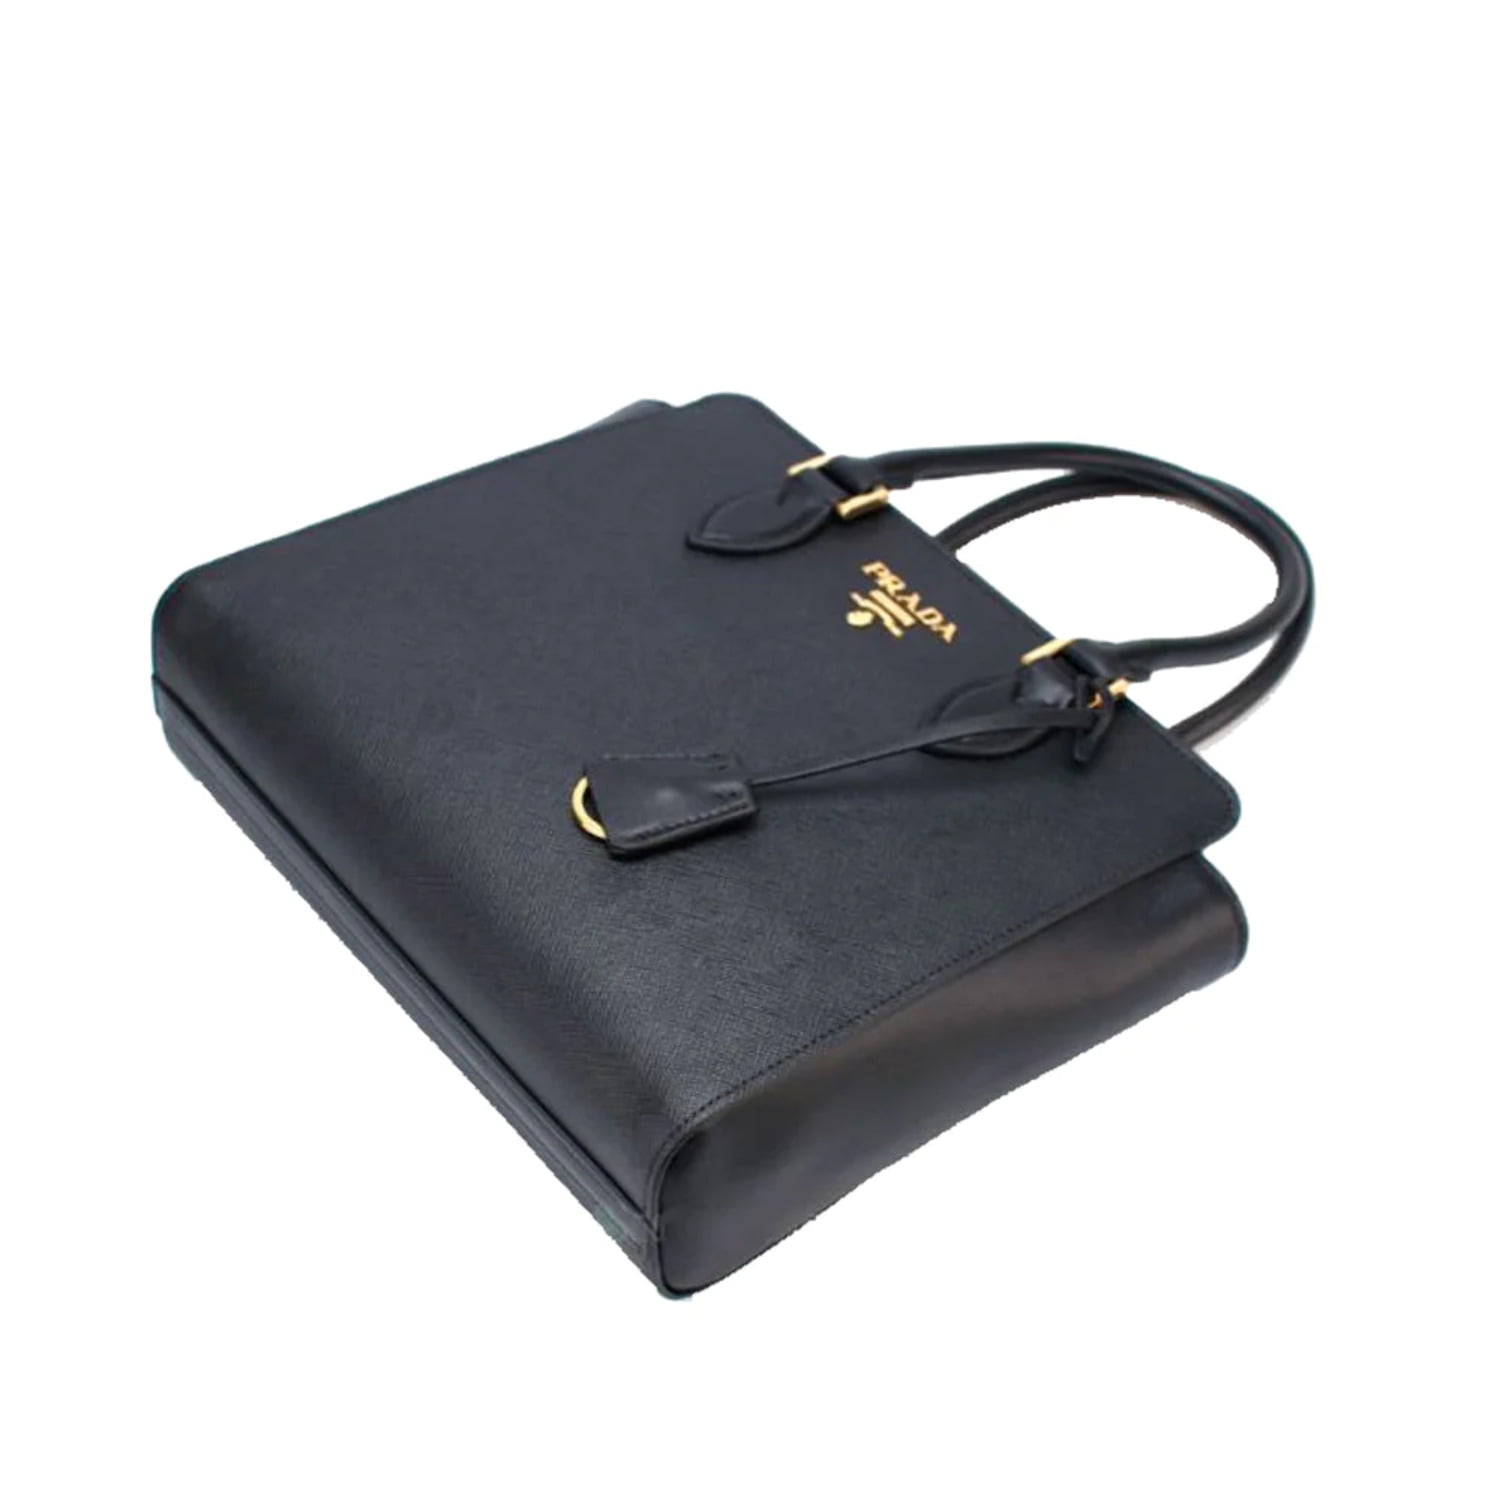 New Prada Saffiano Borsa Black Leather Shoulder Tote Handbag 1BA113 